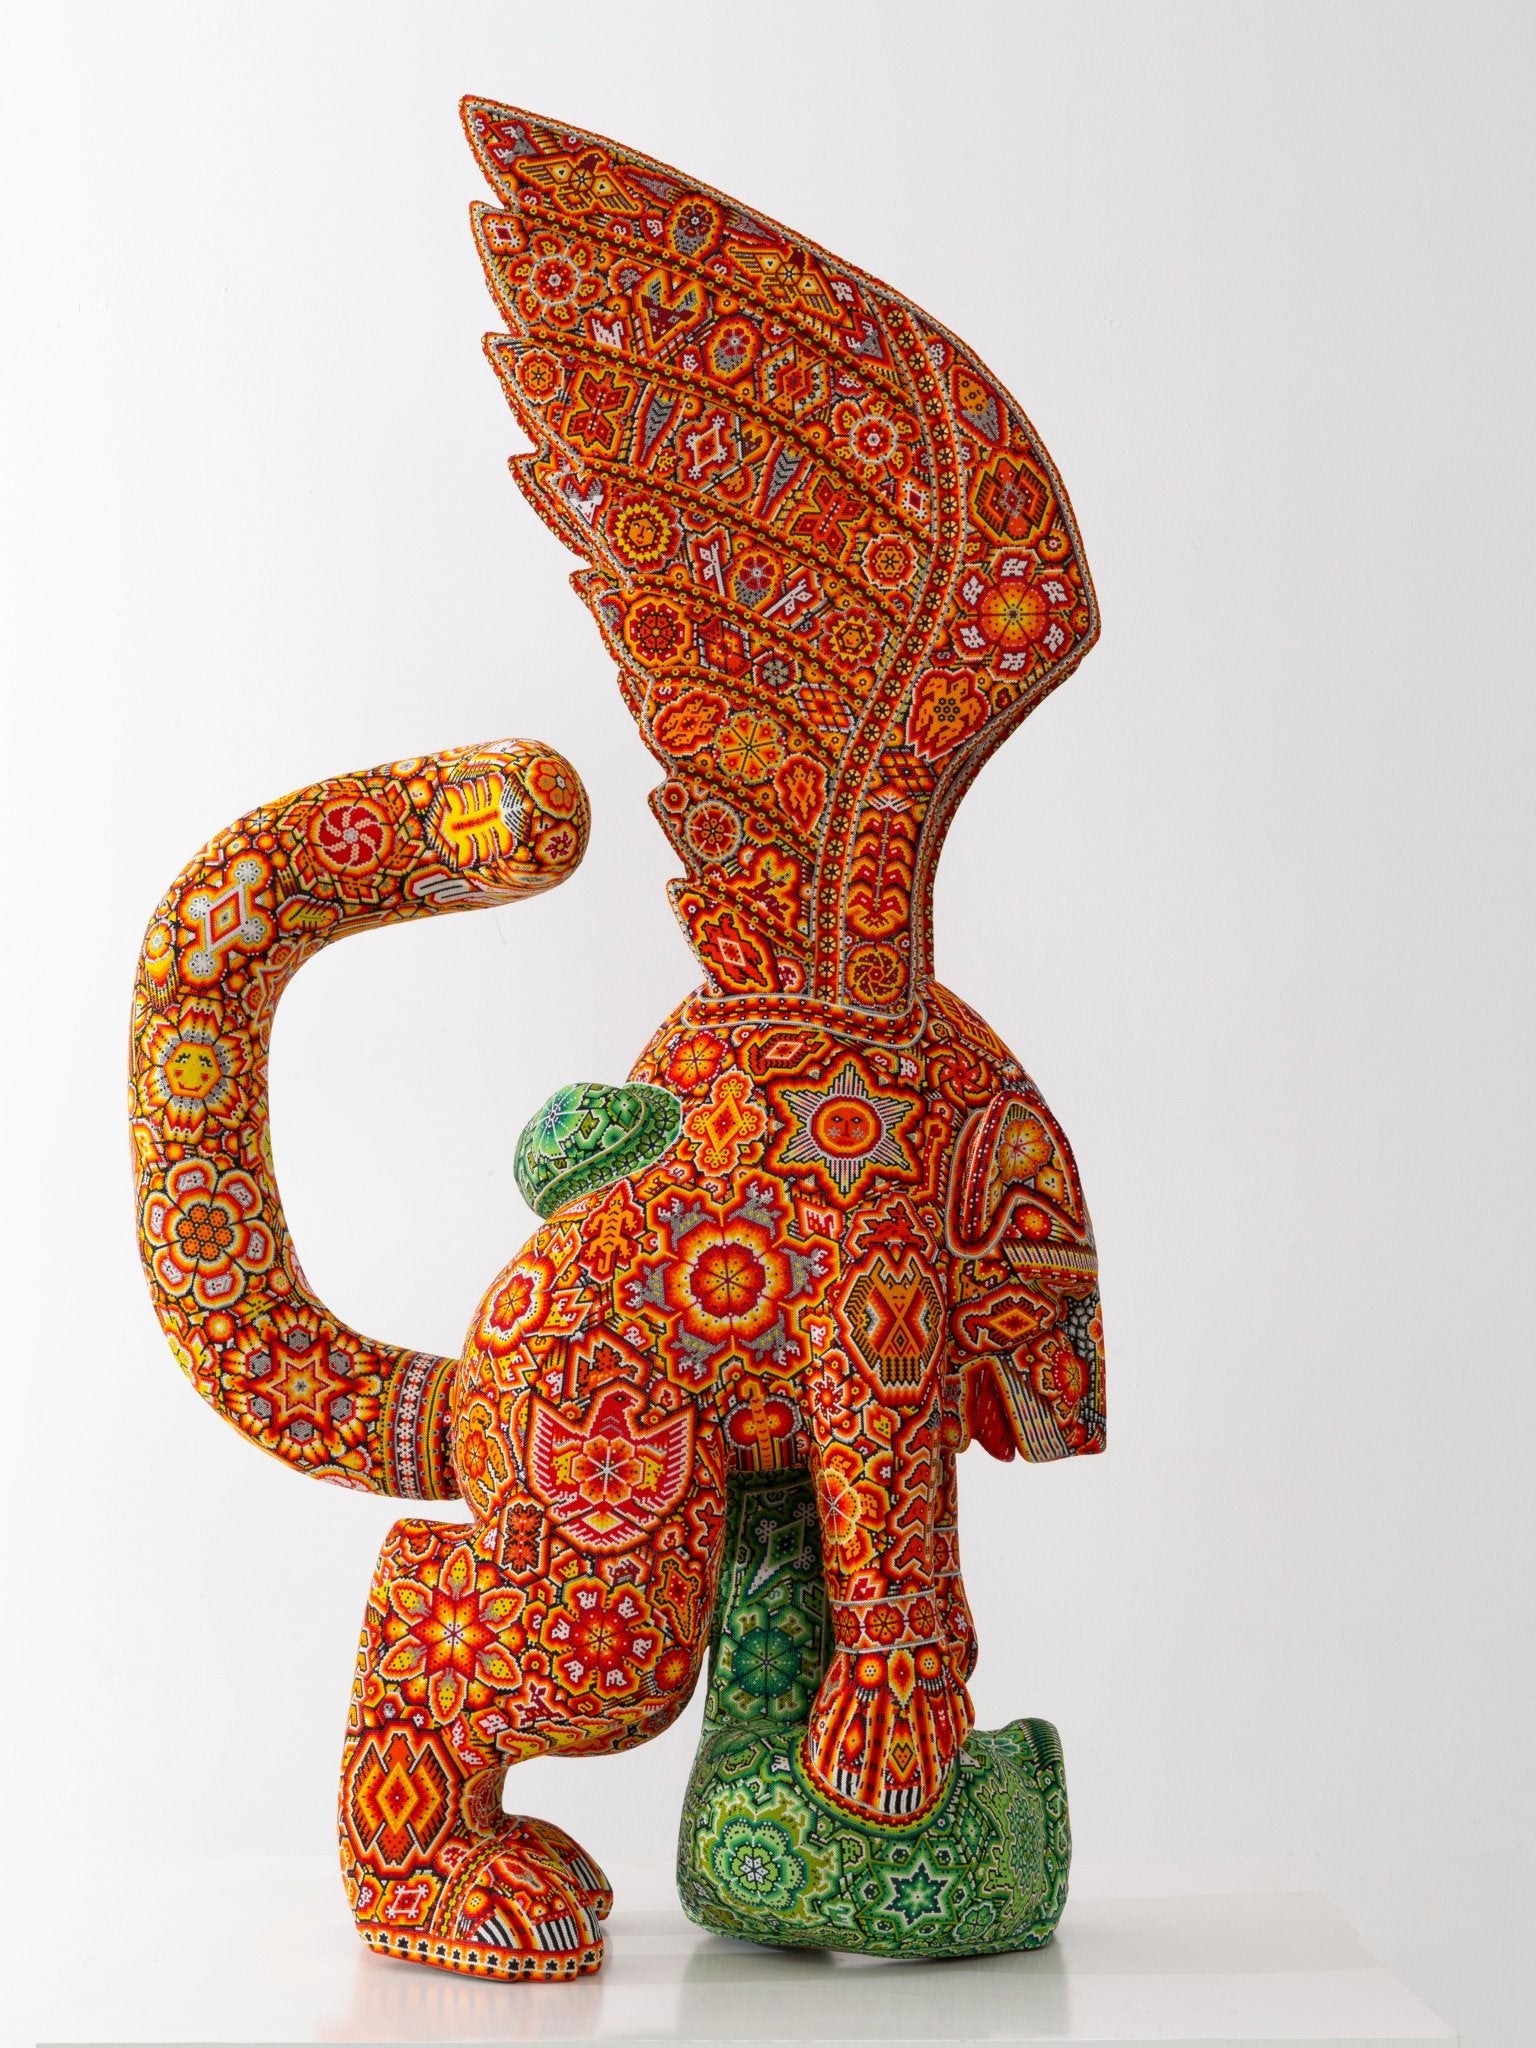 Escultura Arte Huichol - Jaguar alado con serpiente - Tatewari - Arte Huichol - Marakame